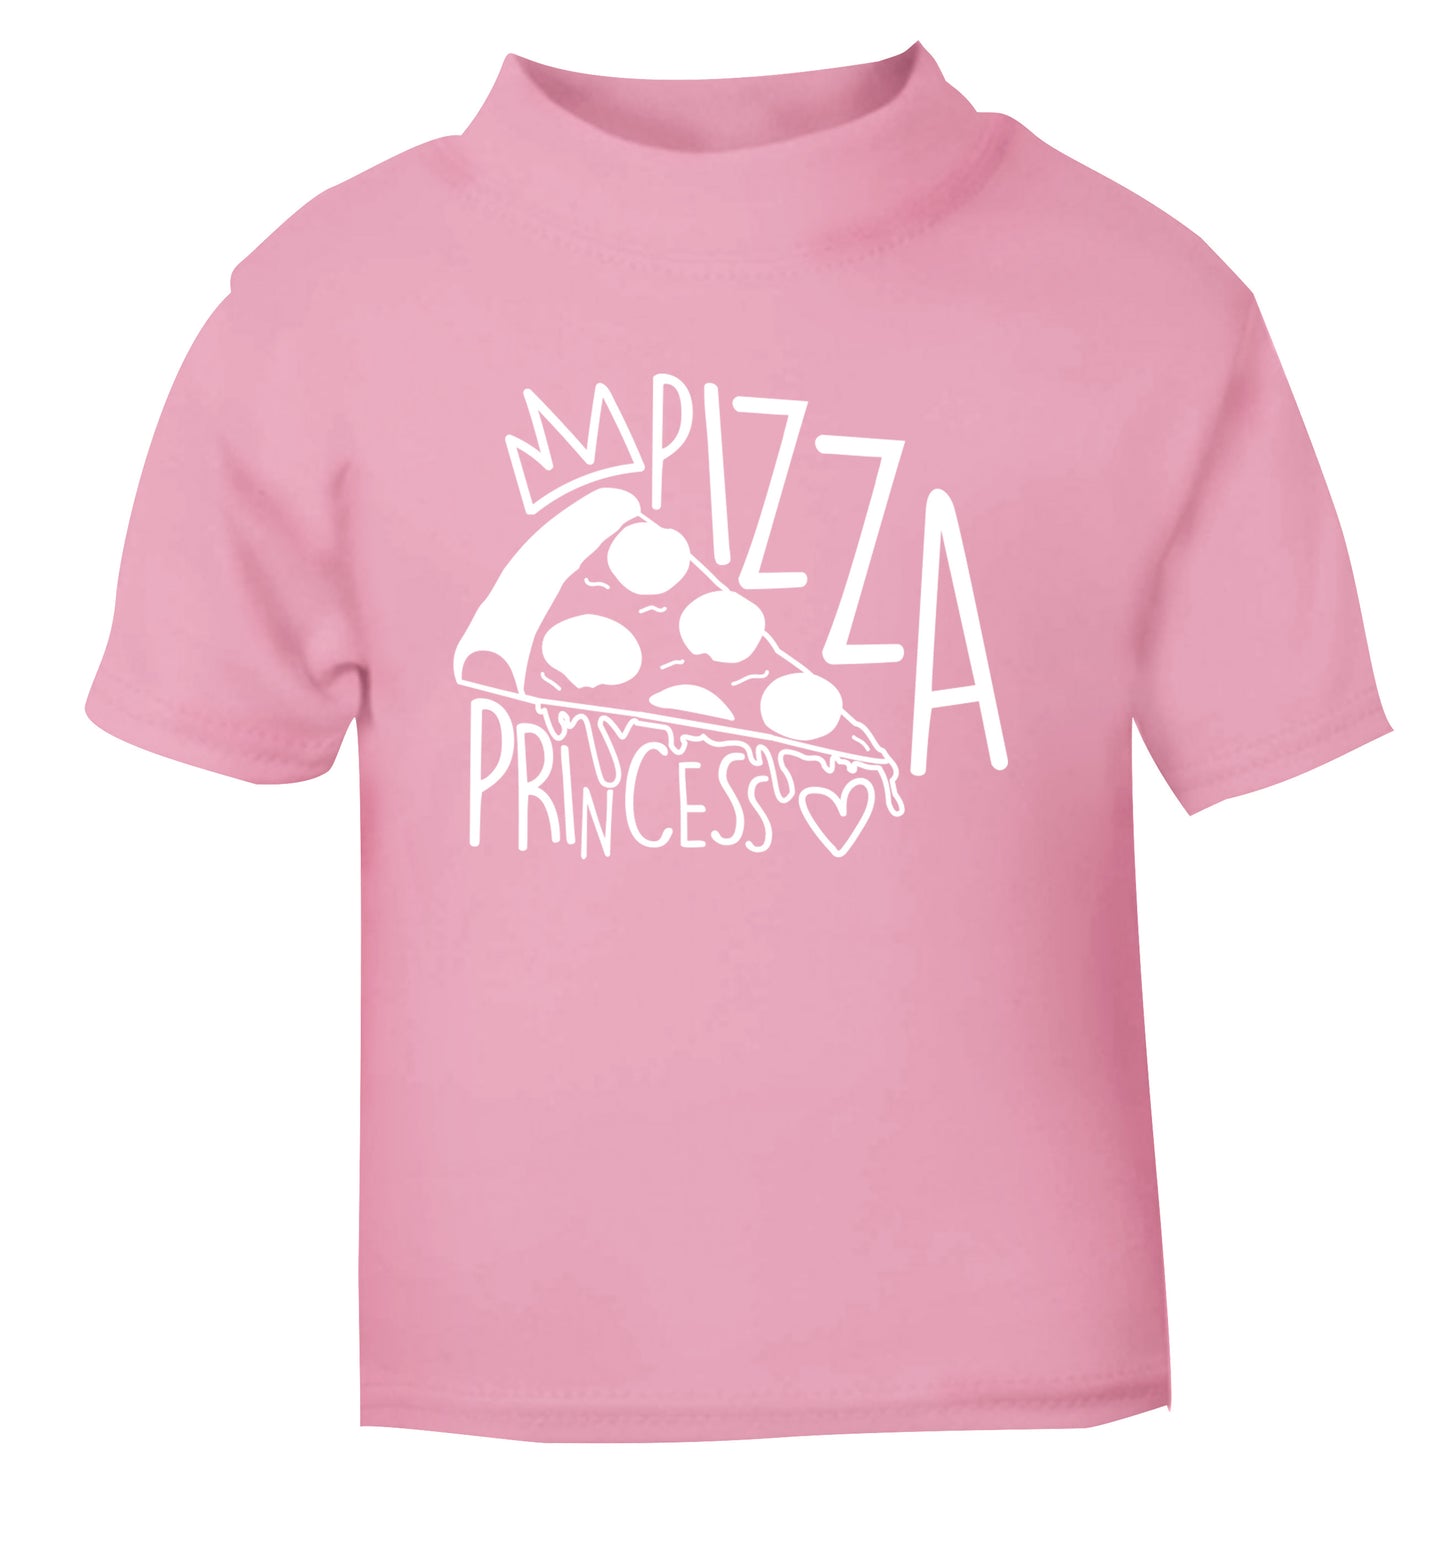 Pizza Princess light pink Baby Toddler Tshirt 2 Years